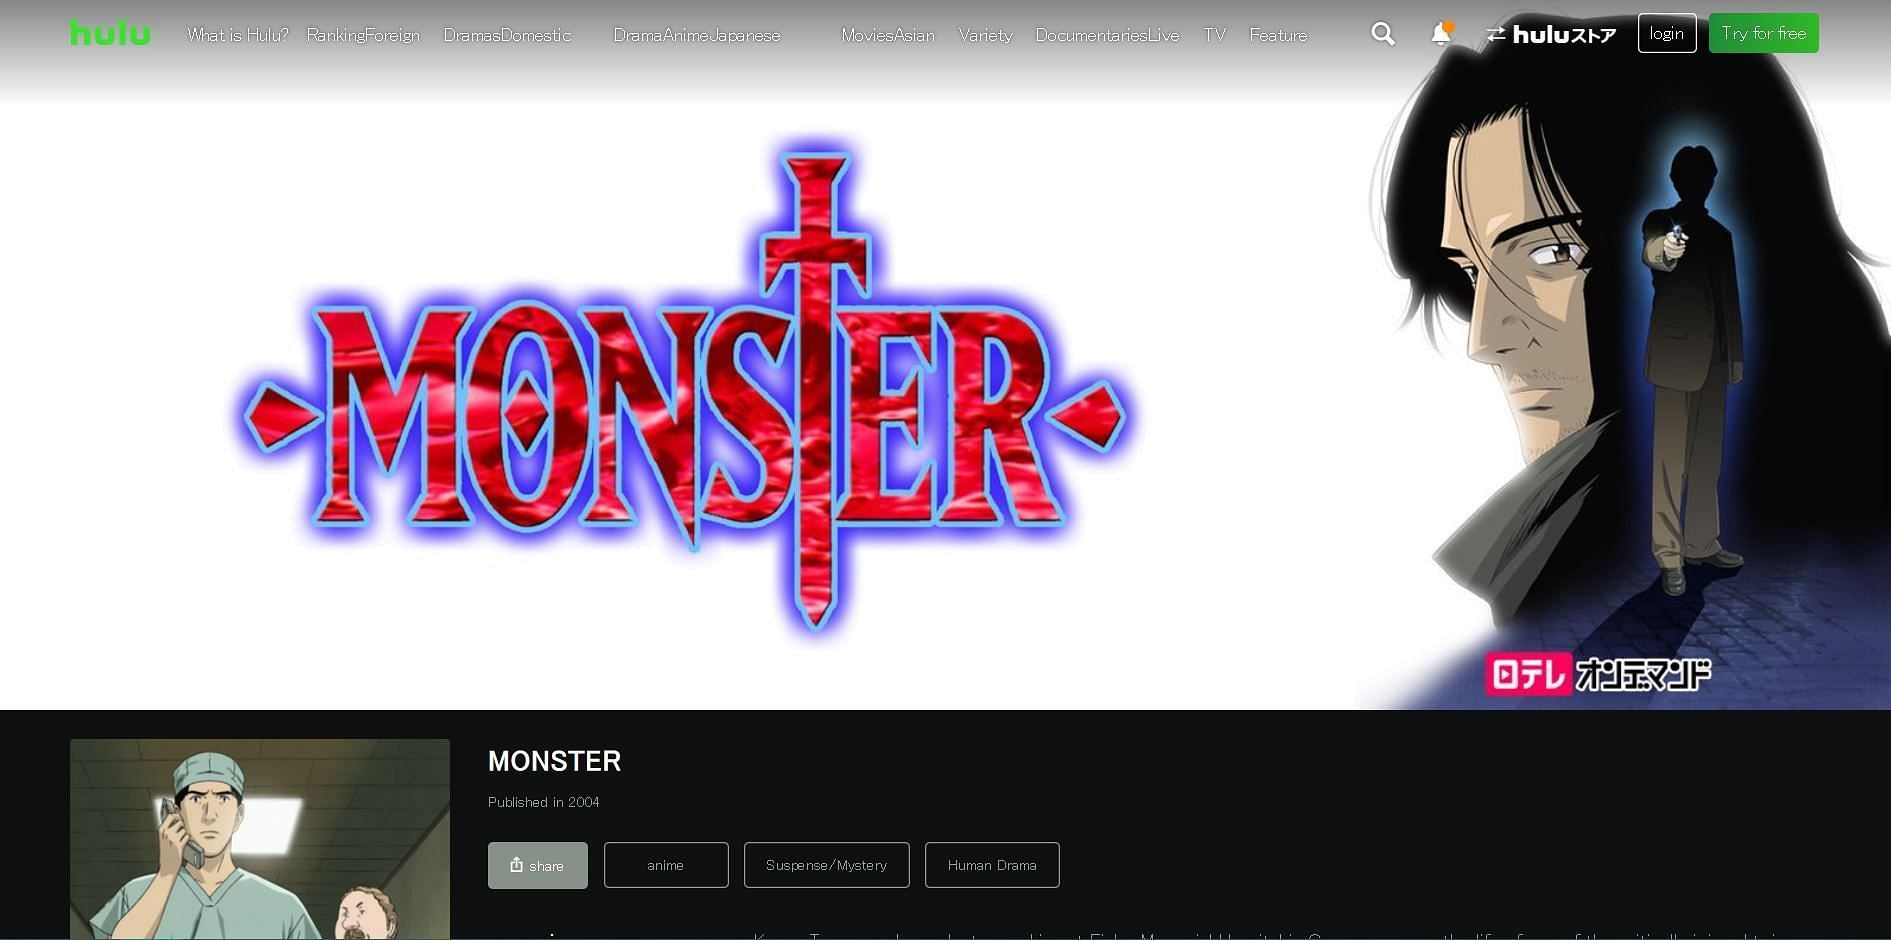 Urasawas MONSTER debuts on Netflix streaming